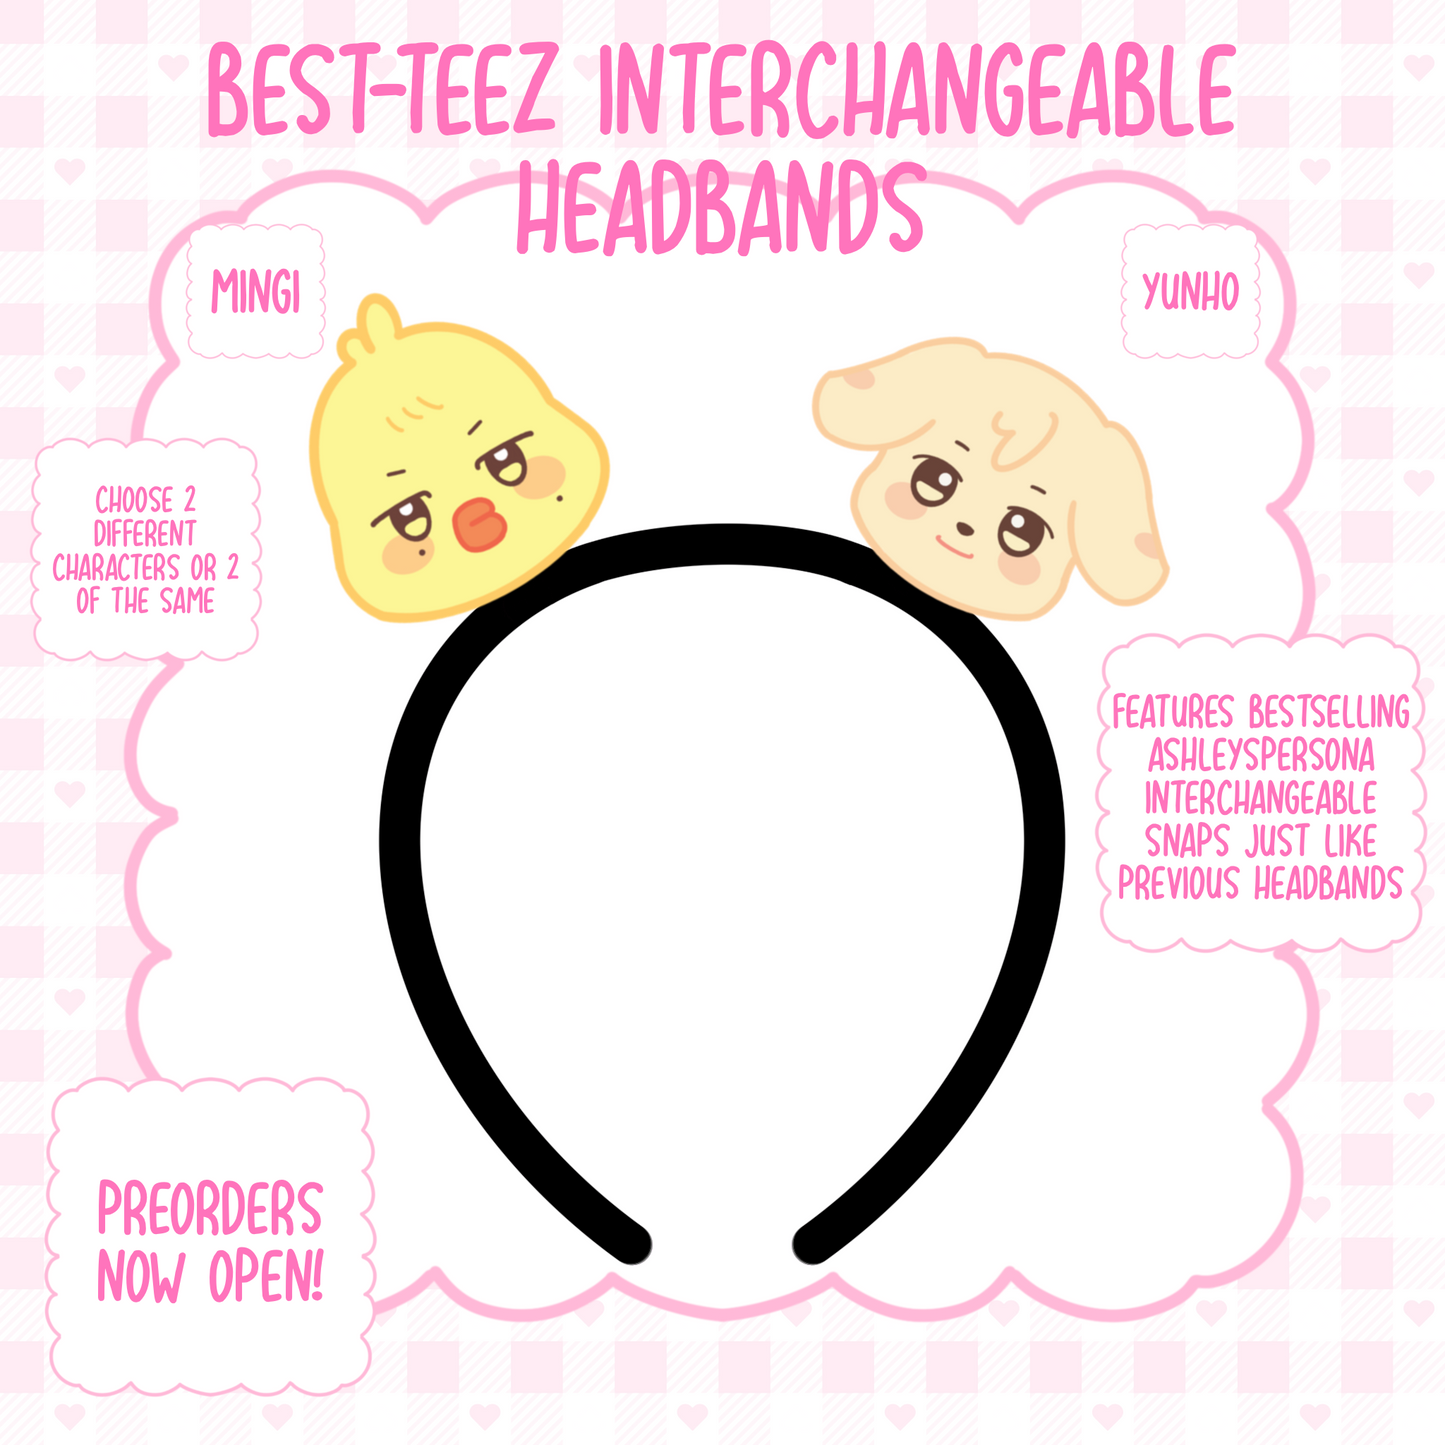 PREORDER READ DESCRIPTION* Best-Teez Interchangeable Headband